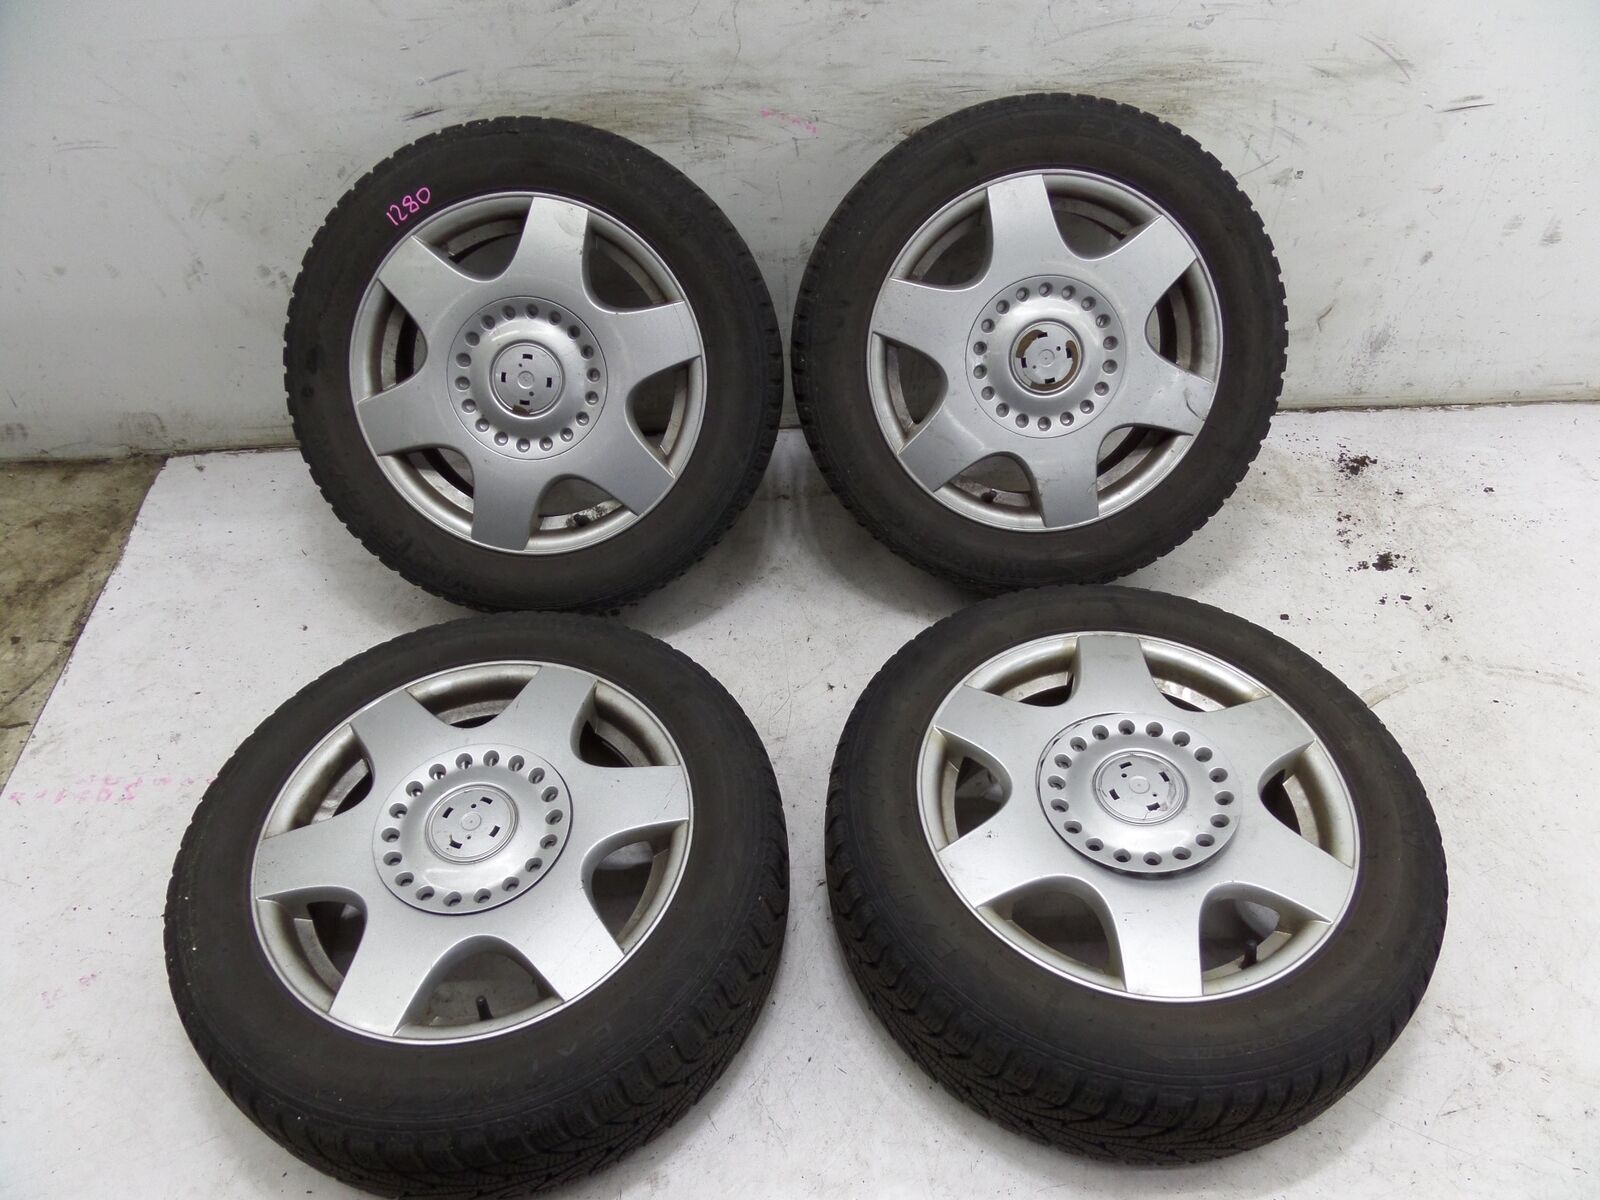 00-05 VW MK4 Wheels w/ Snow Tires 16